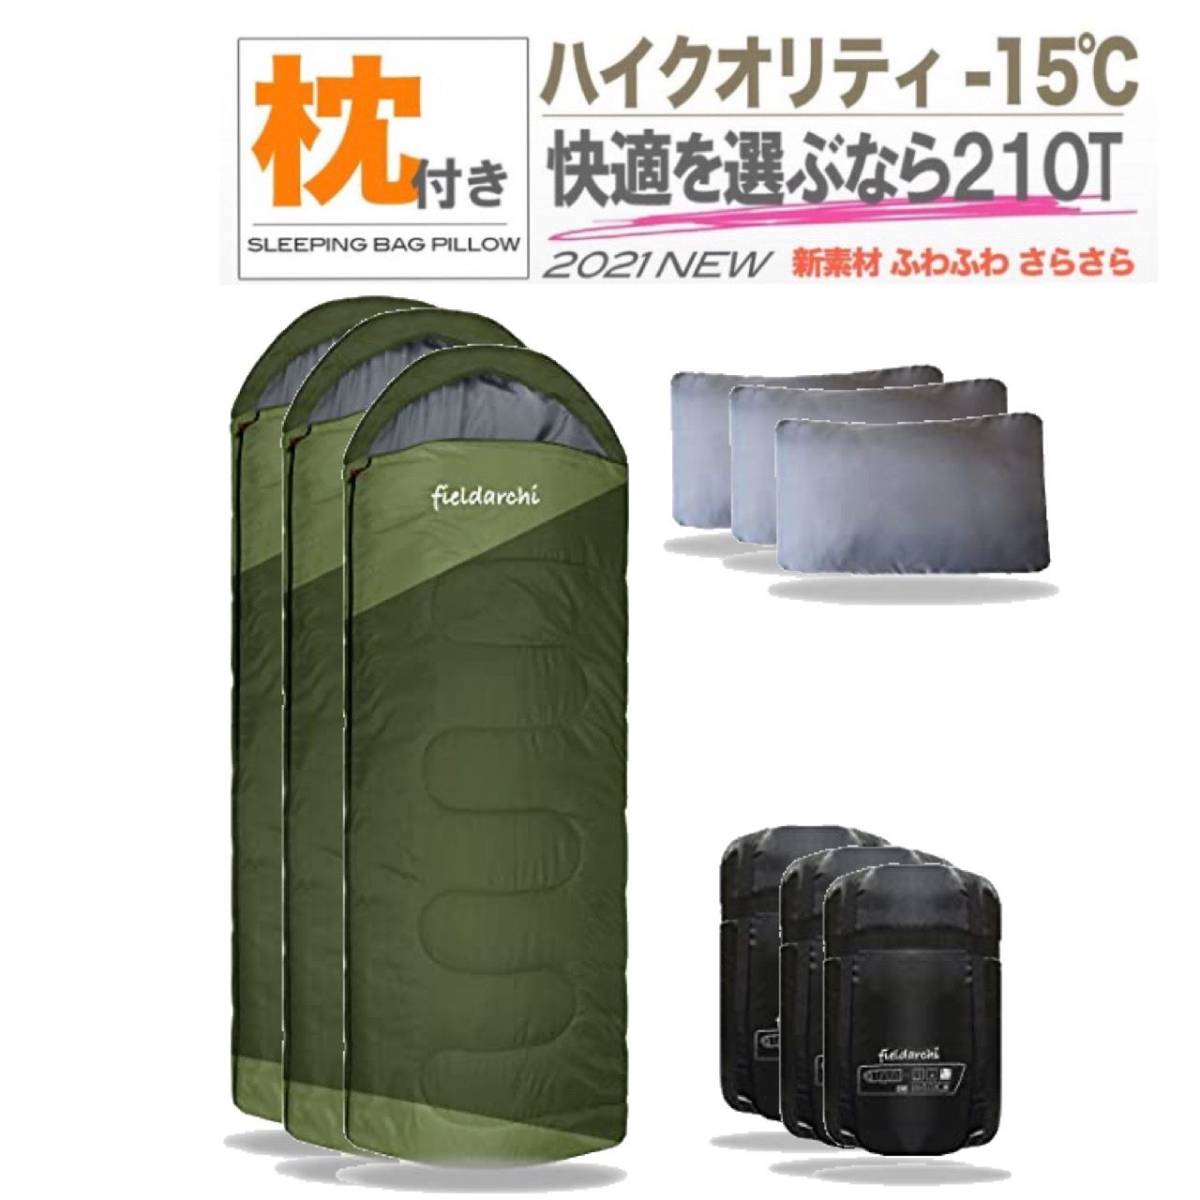 90%OFF!】 未使用 キャンプ 新品 寝袋 ２個セット 枕付き -10